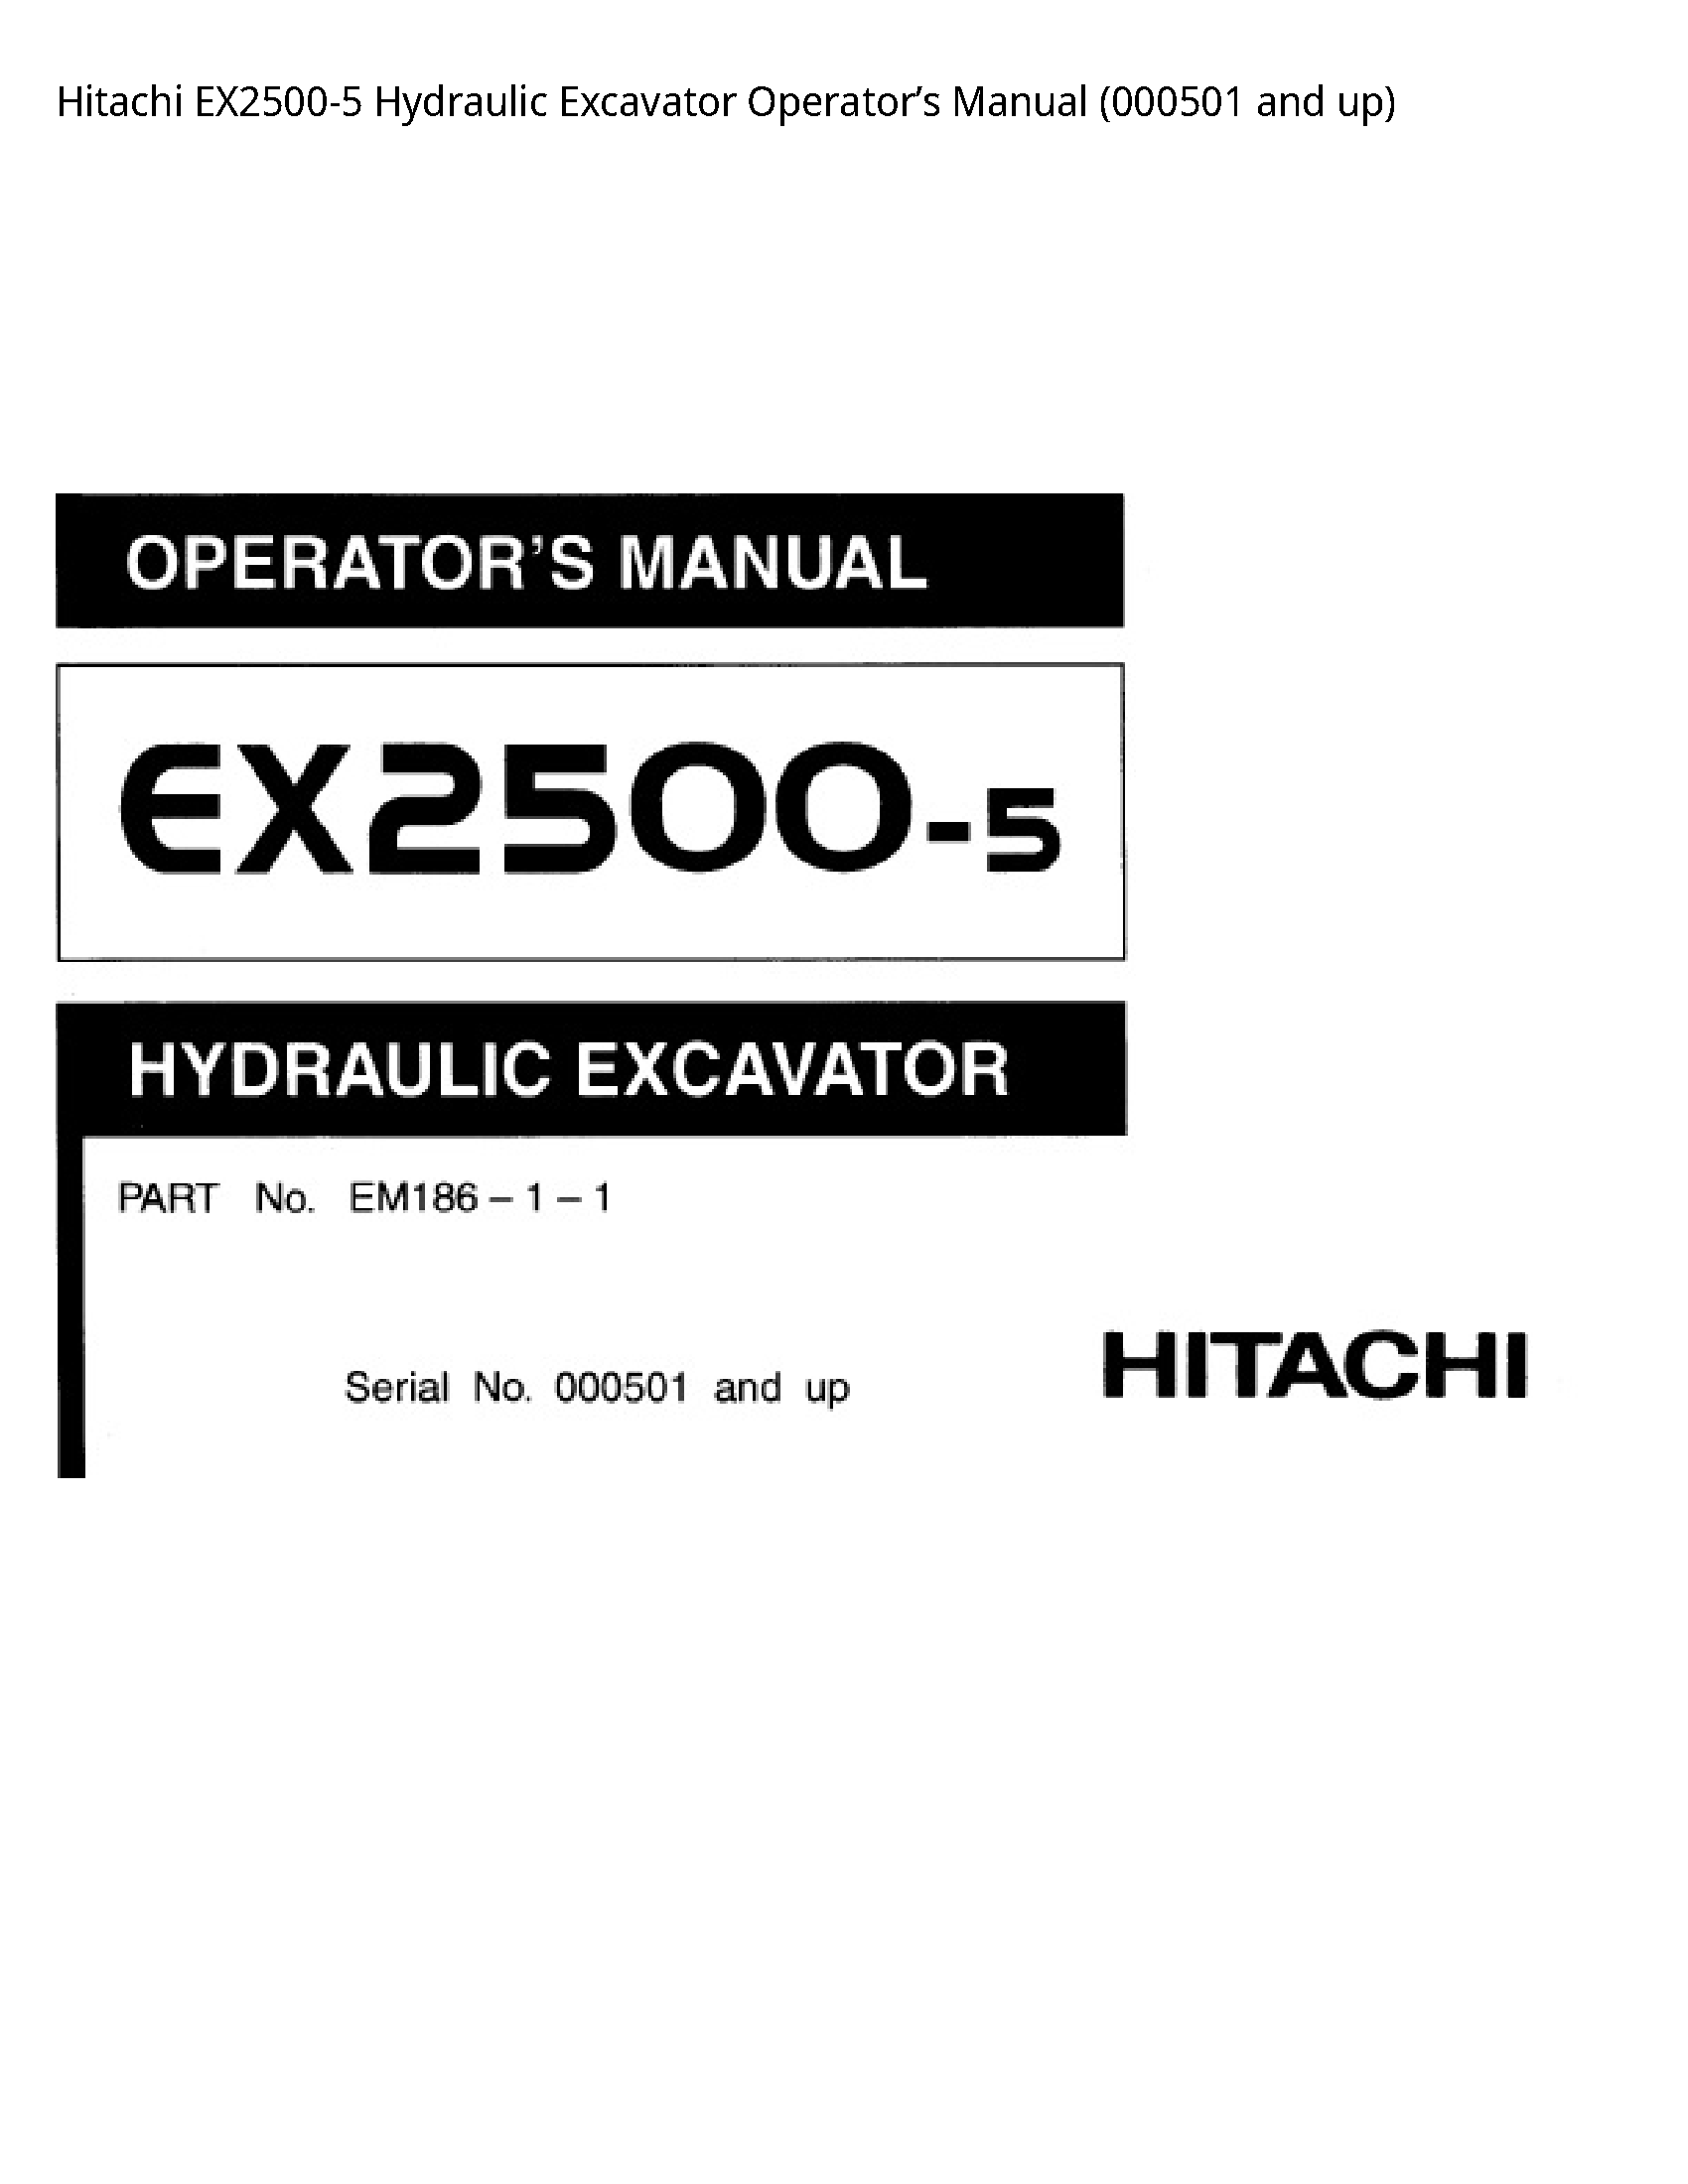 Hitachi EX2500-5 Hydraulic Excavator Operator’s manual